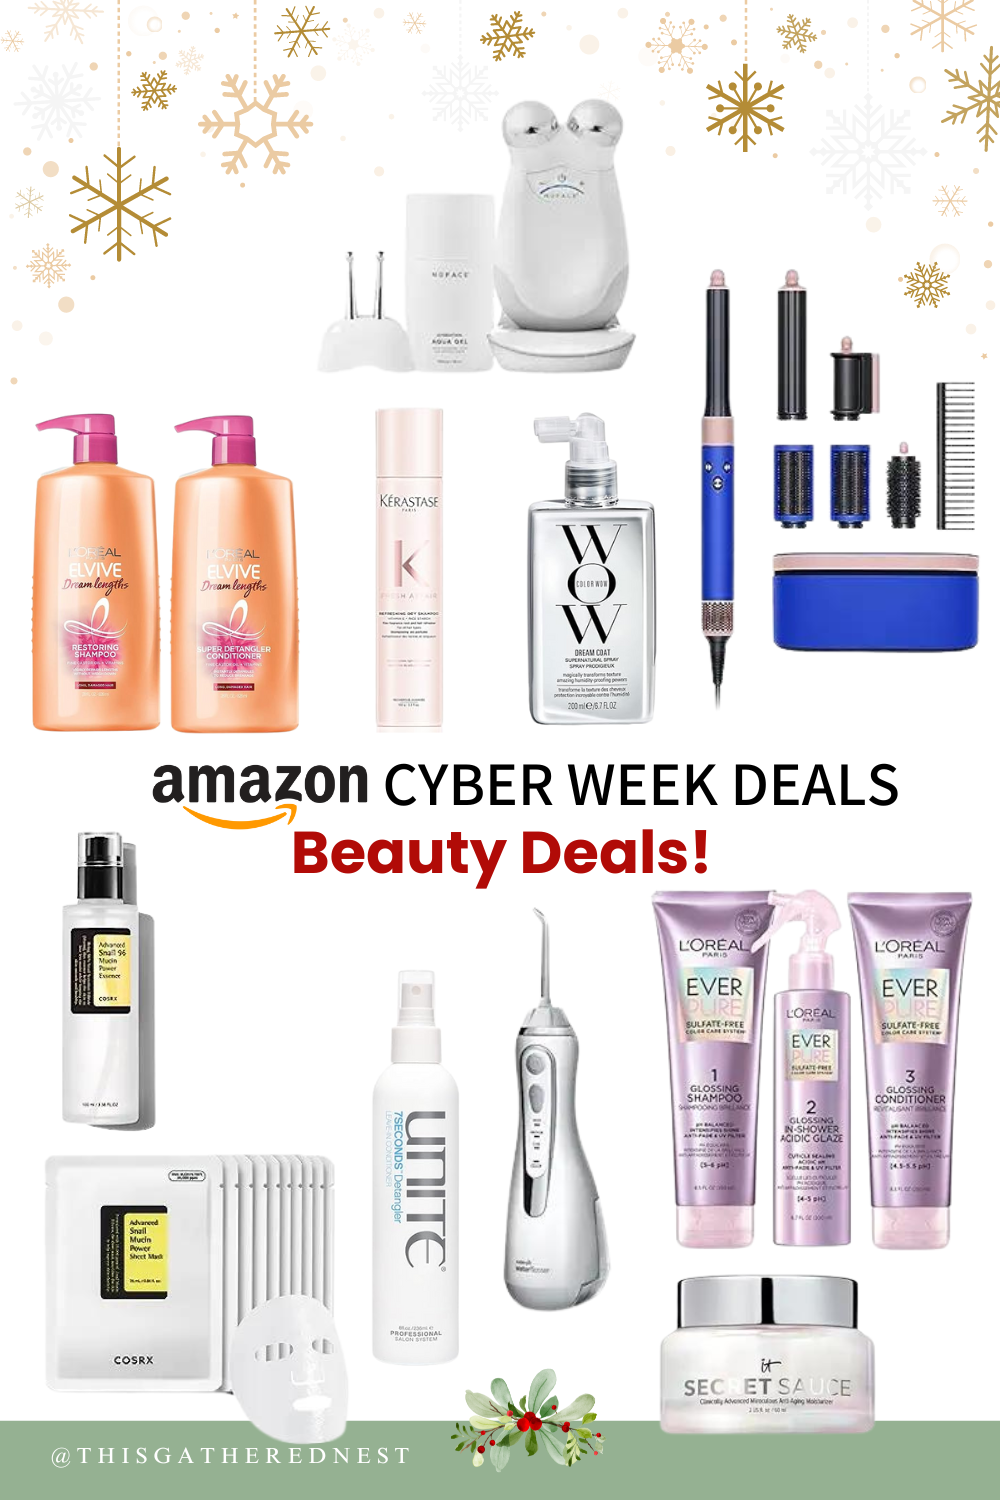 Amazon Beauty Deals